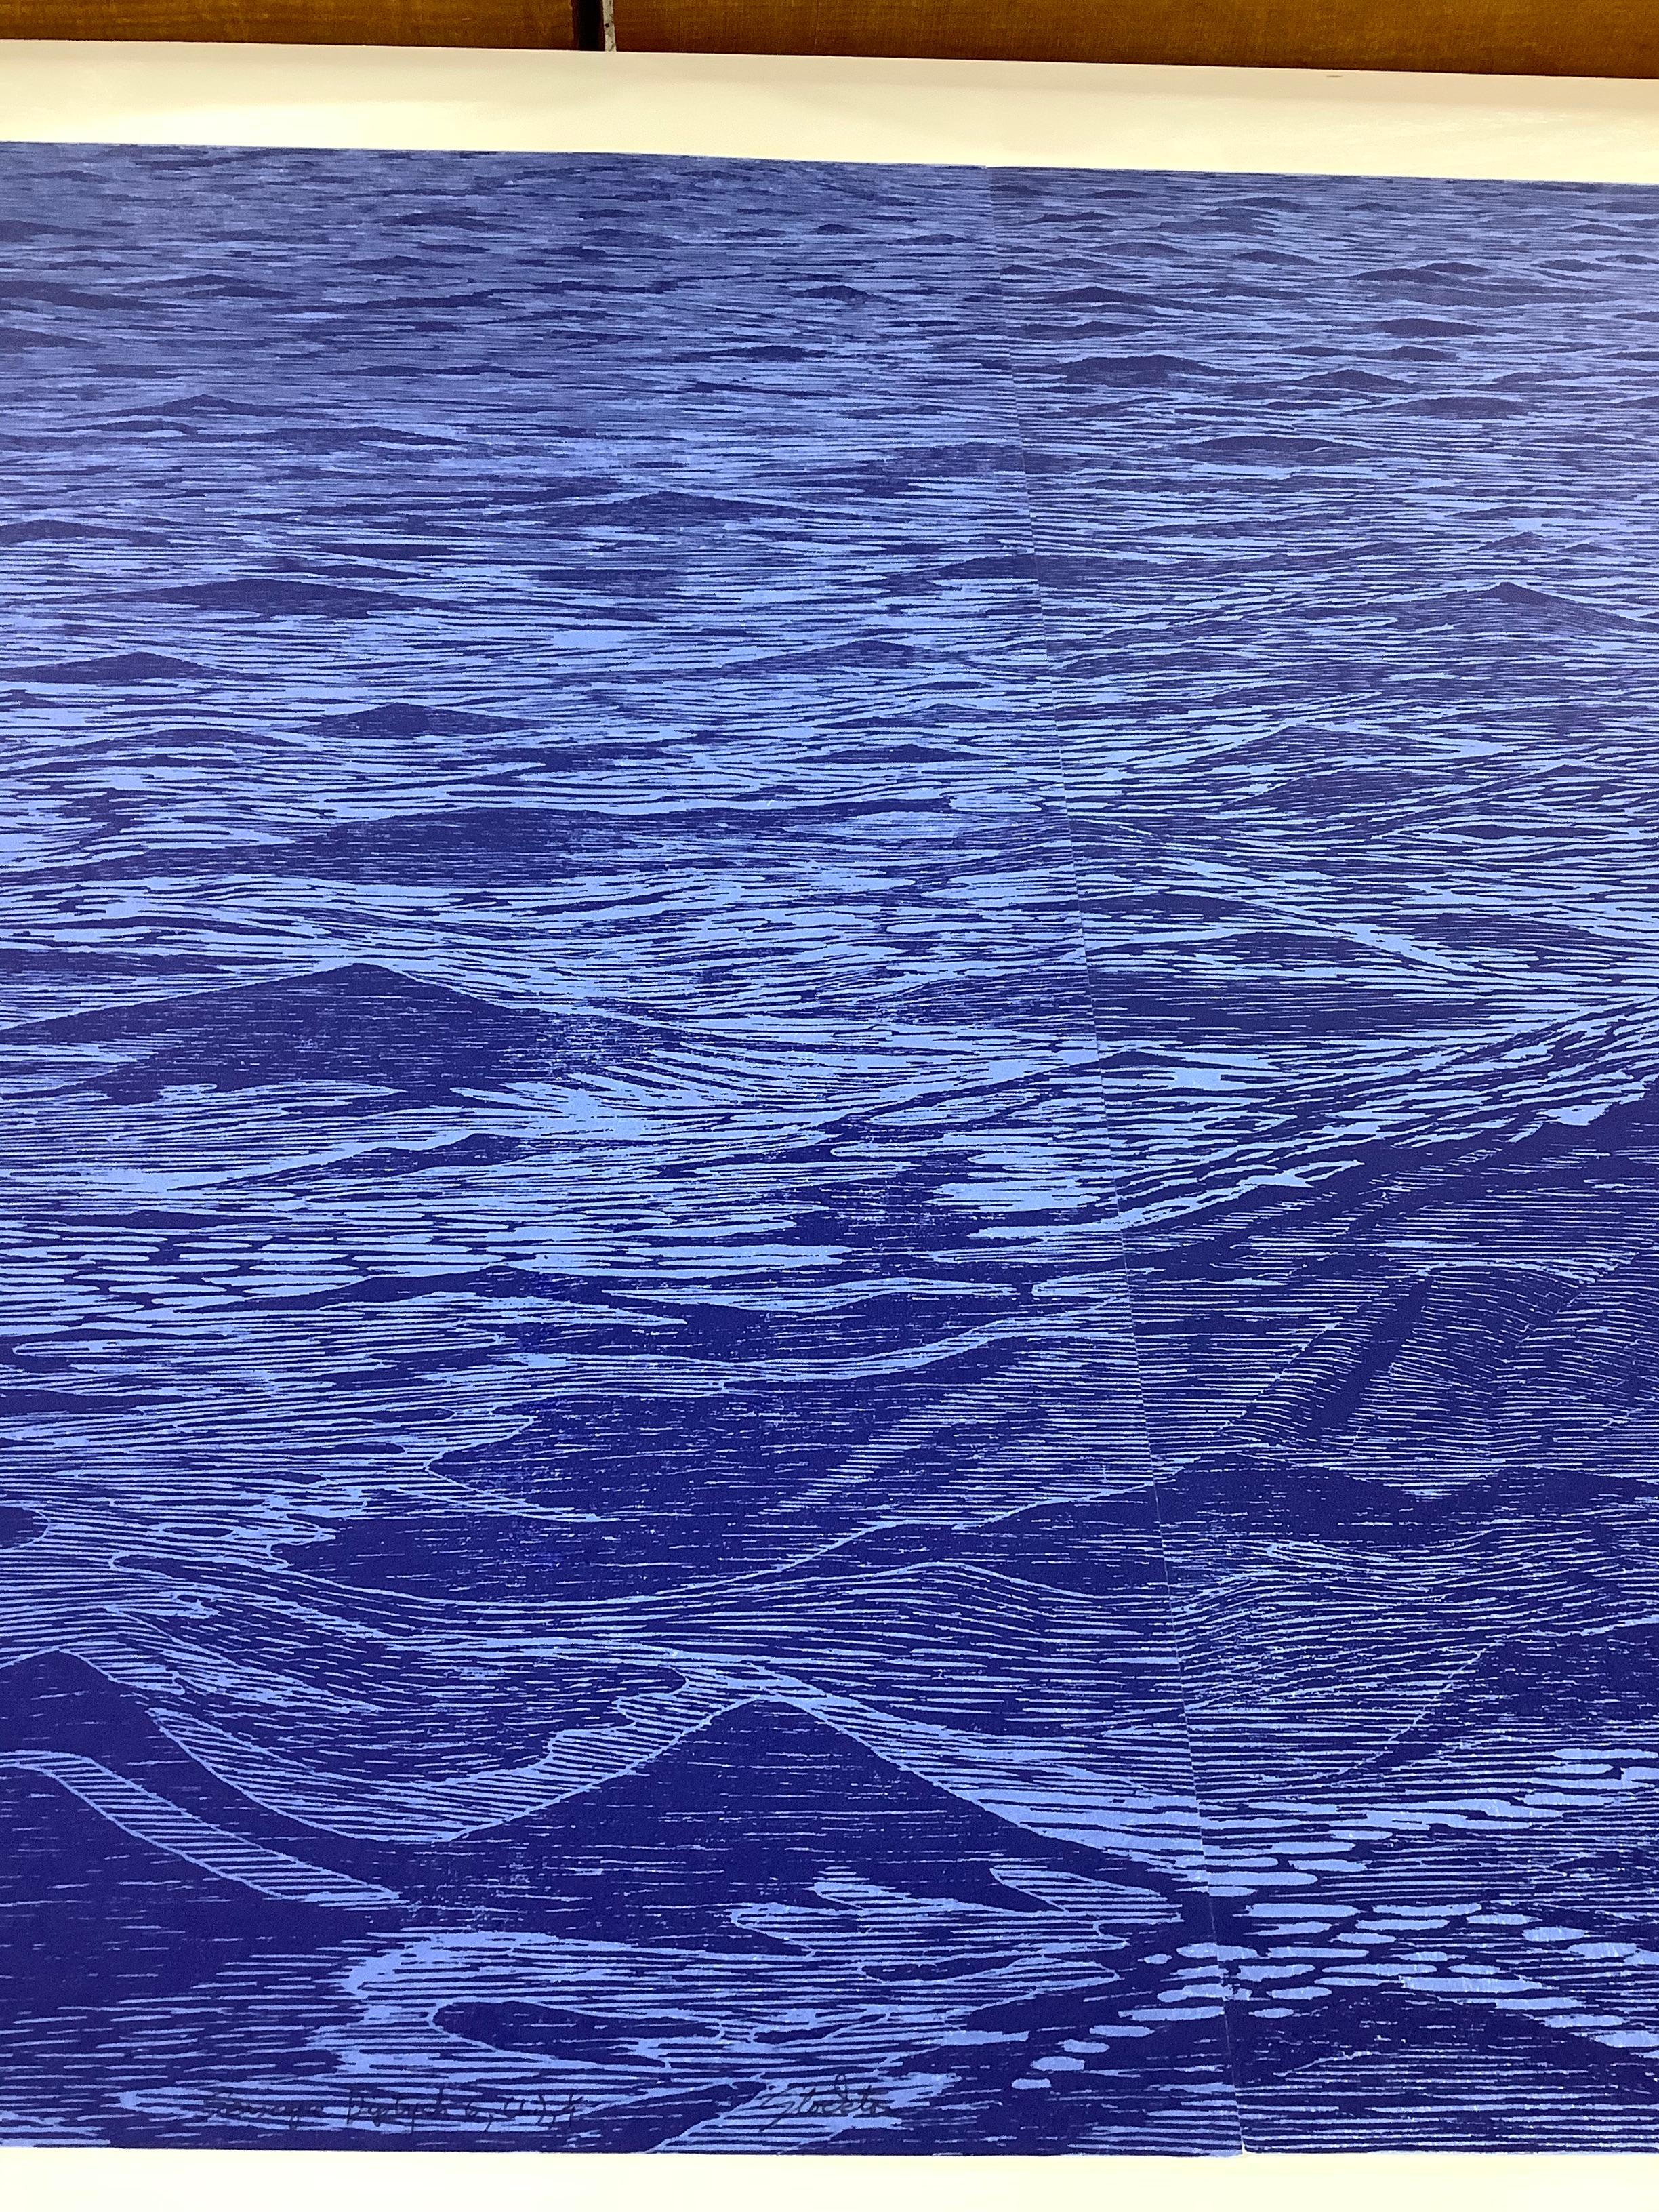 Seascape Diptych Six, Cobalt Blue Horizontal Seascape, Waves Woodcut Print   For Sale 7